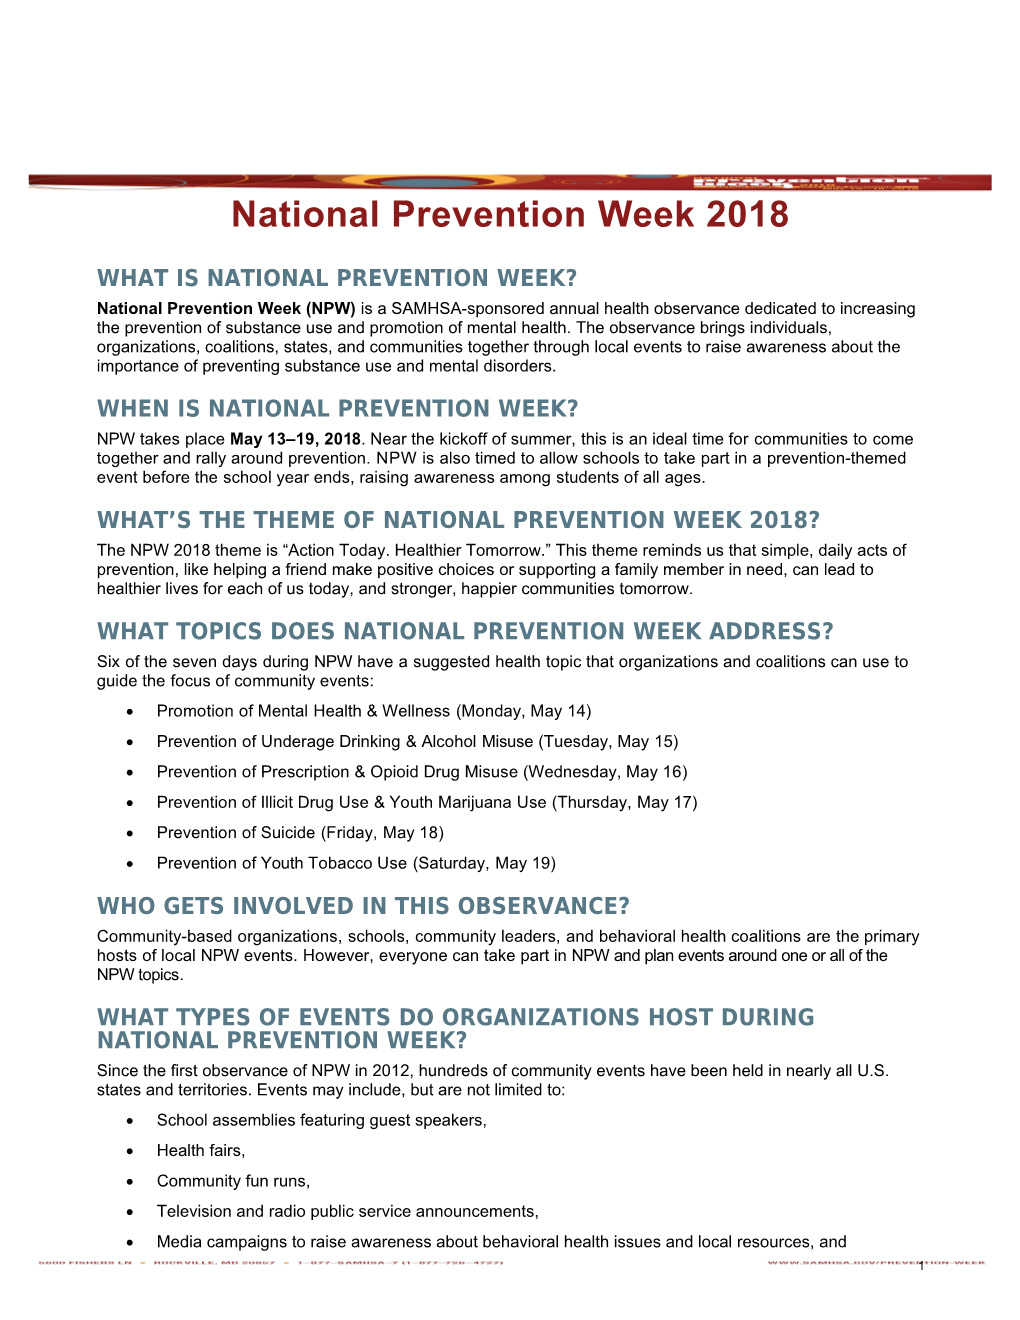 National Prevention Week 2018 Customizable Fact Sheet